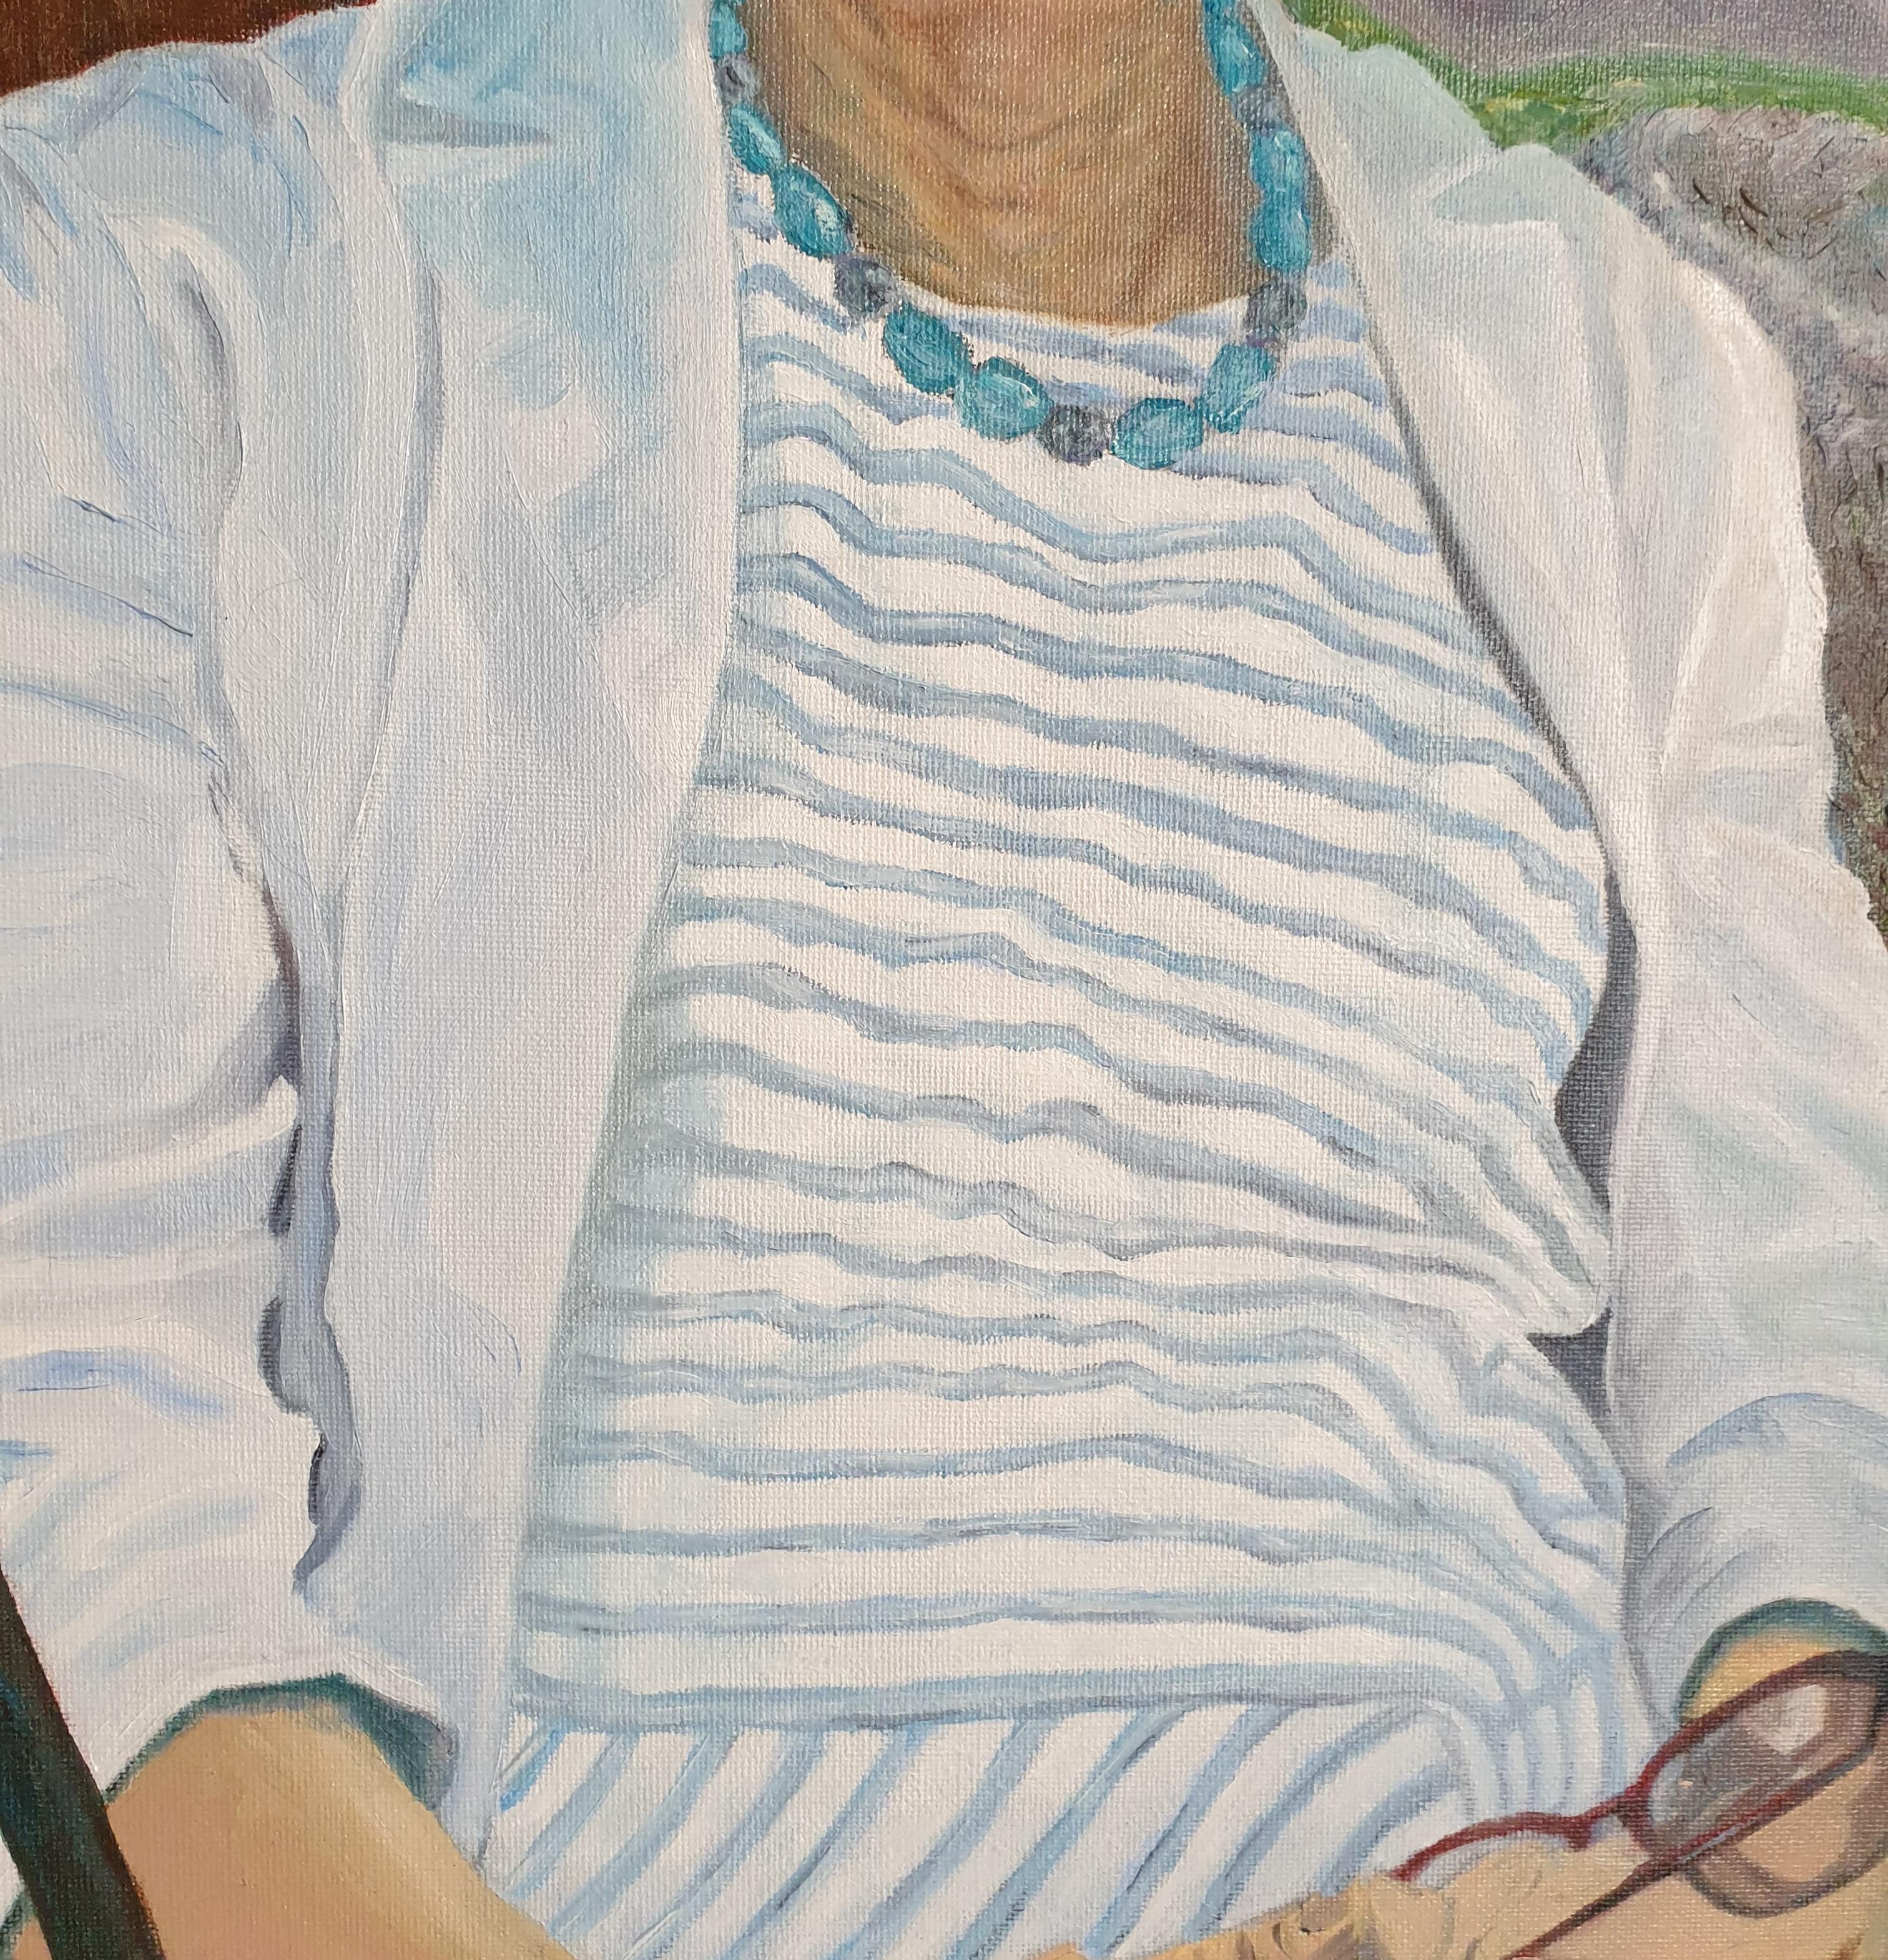 Cora. Contemporary Portrait in Oil on Linen Covered Board. For Sale 3